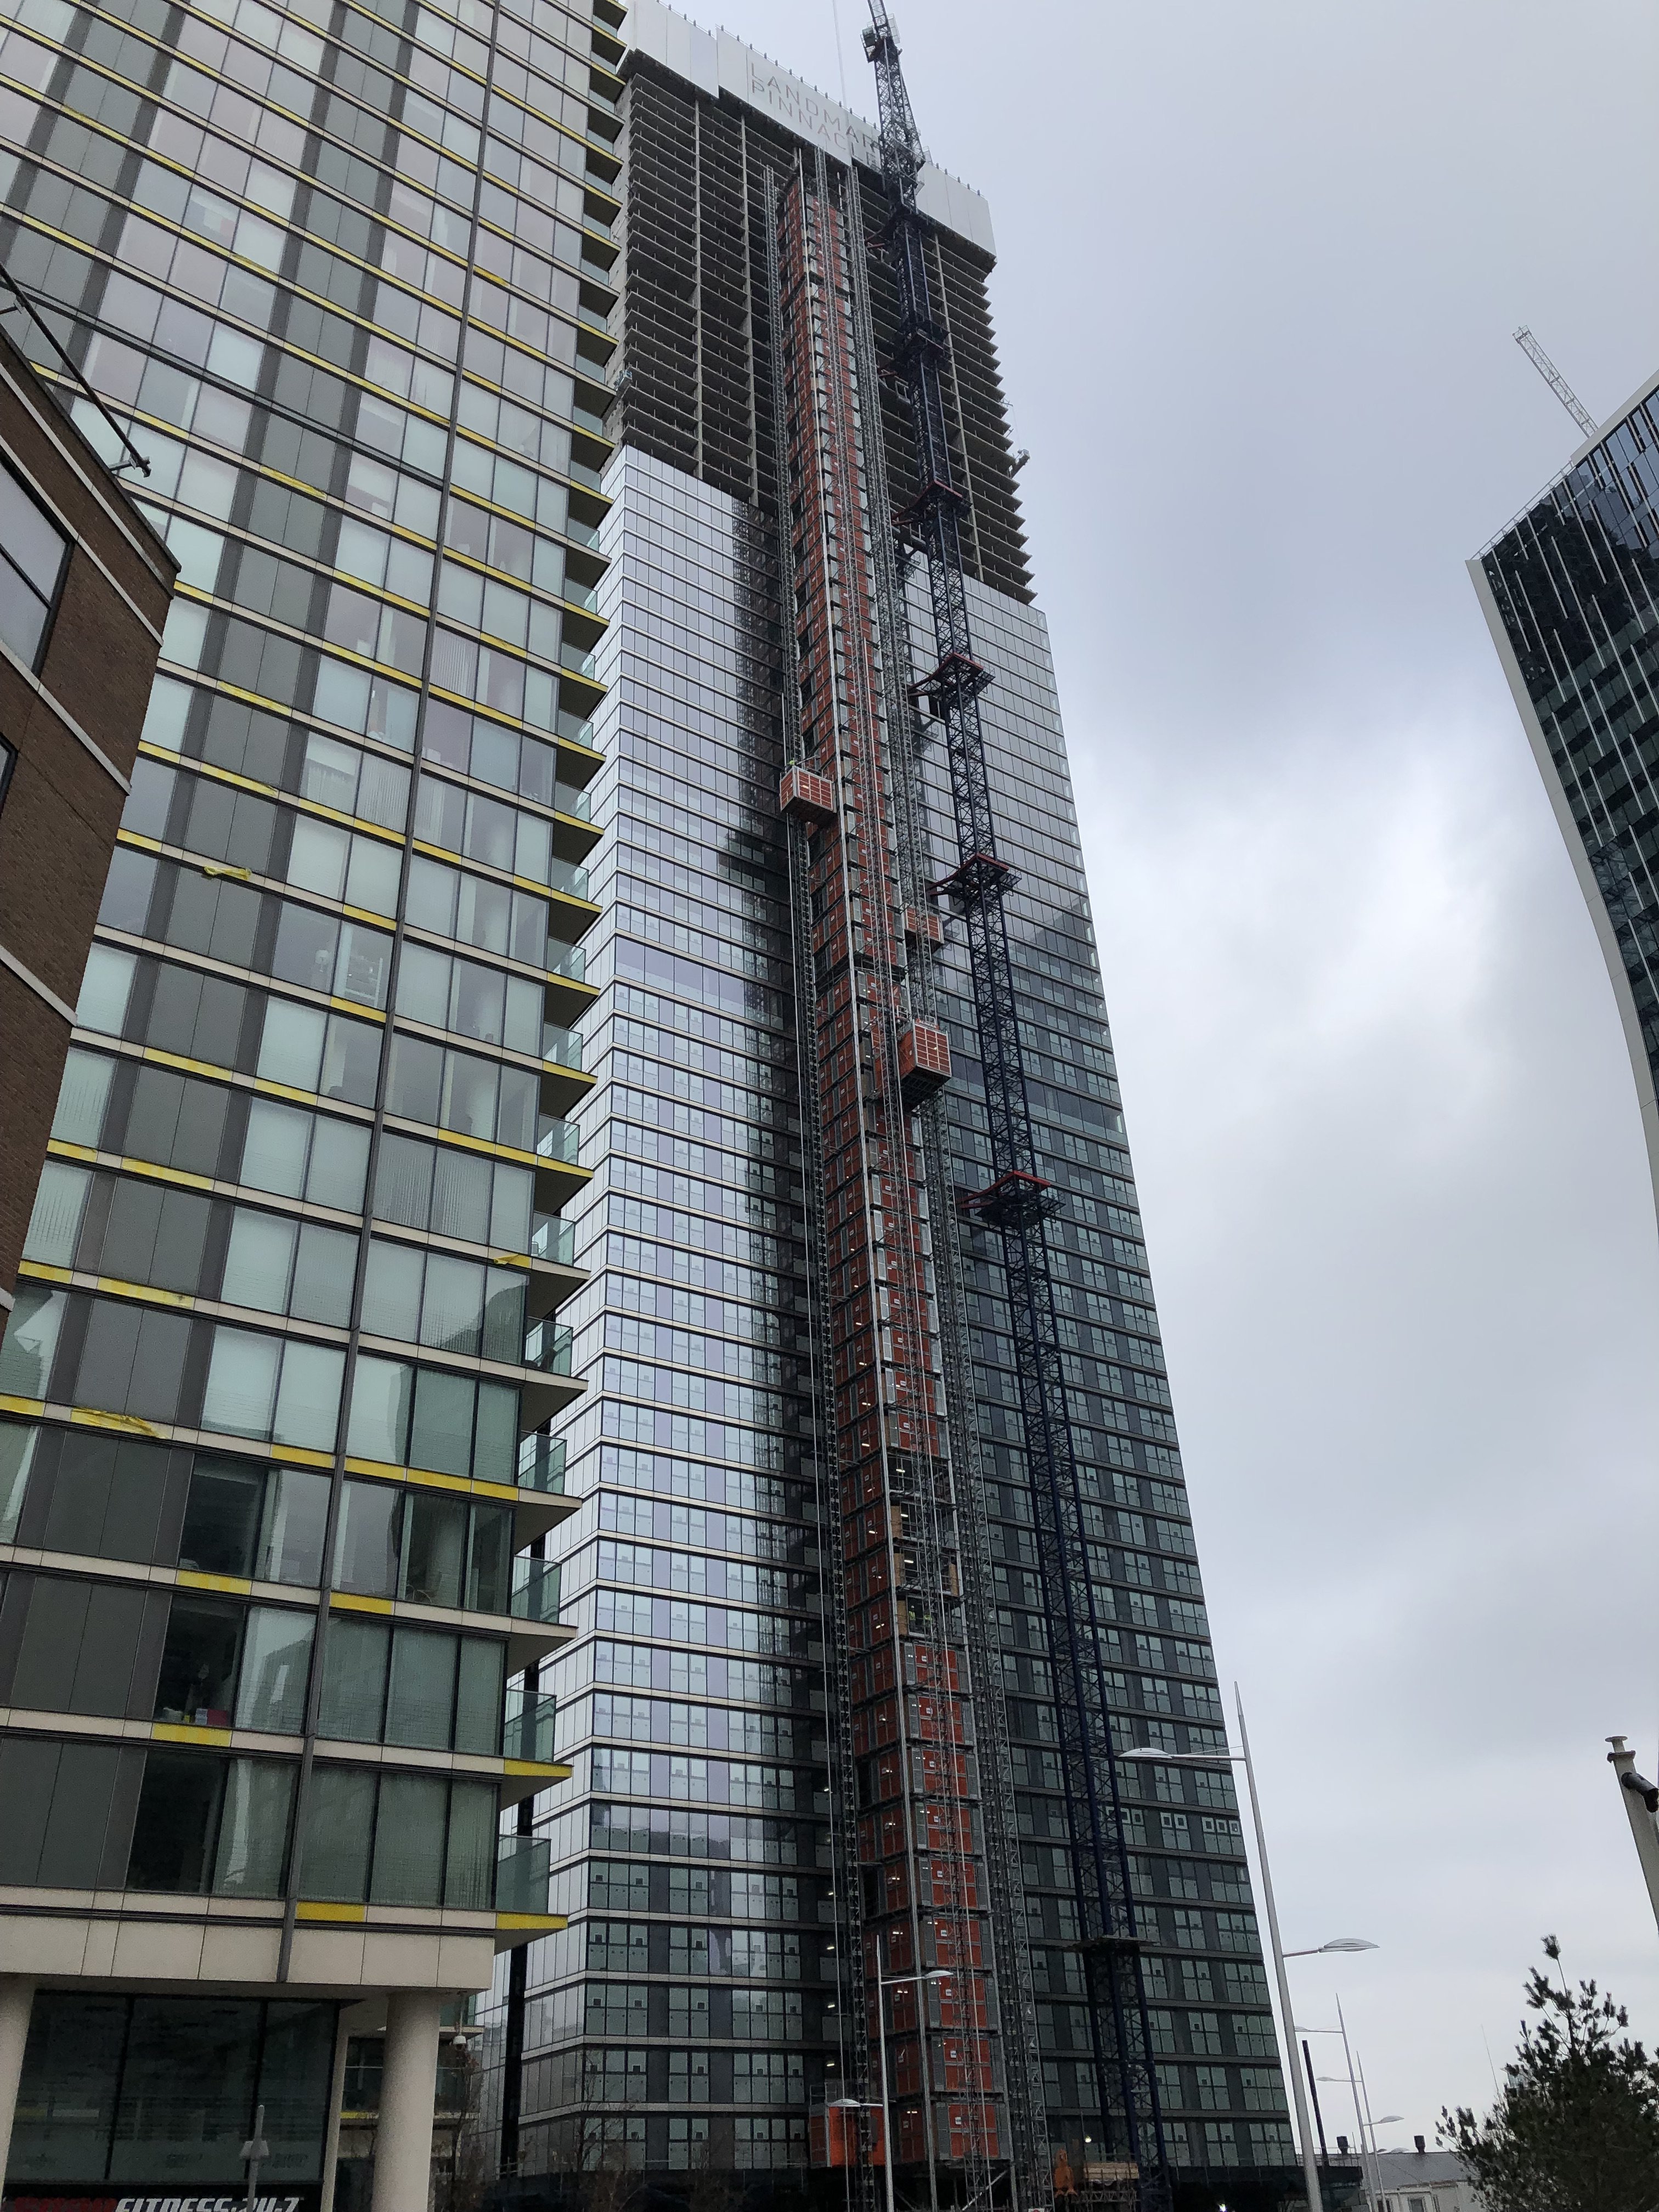 2018: Alimak passenger hoists at Landmark Pinnacle construction site in London